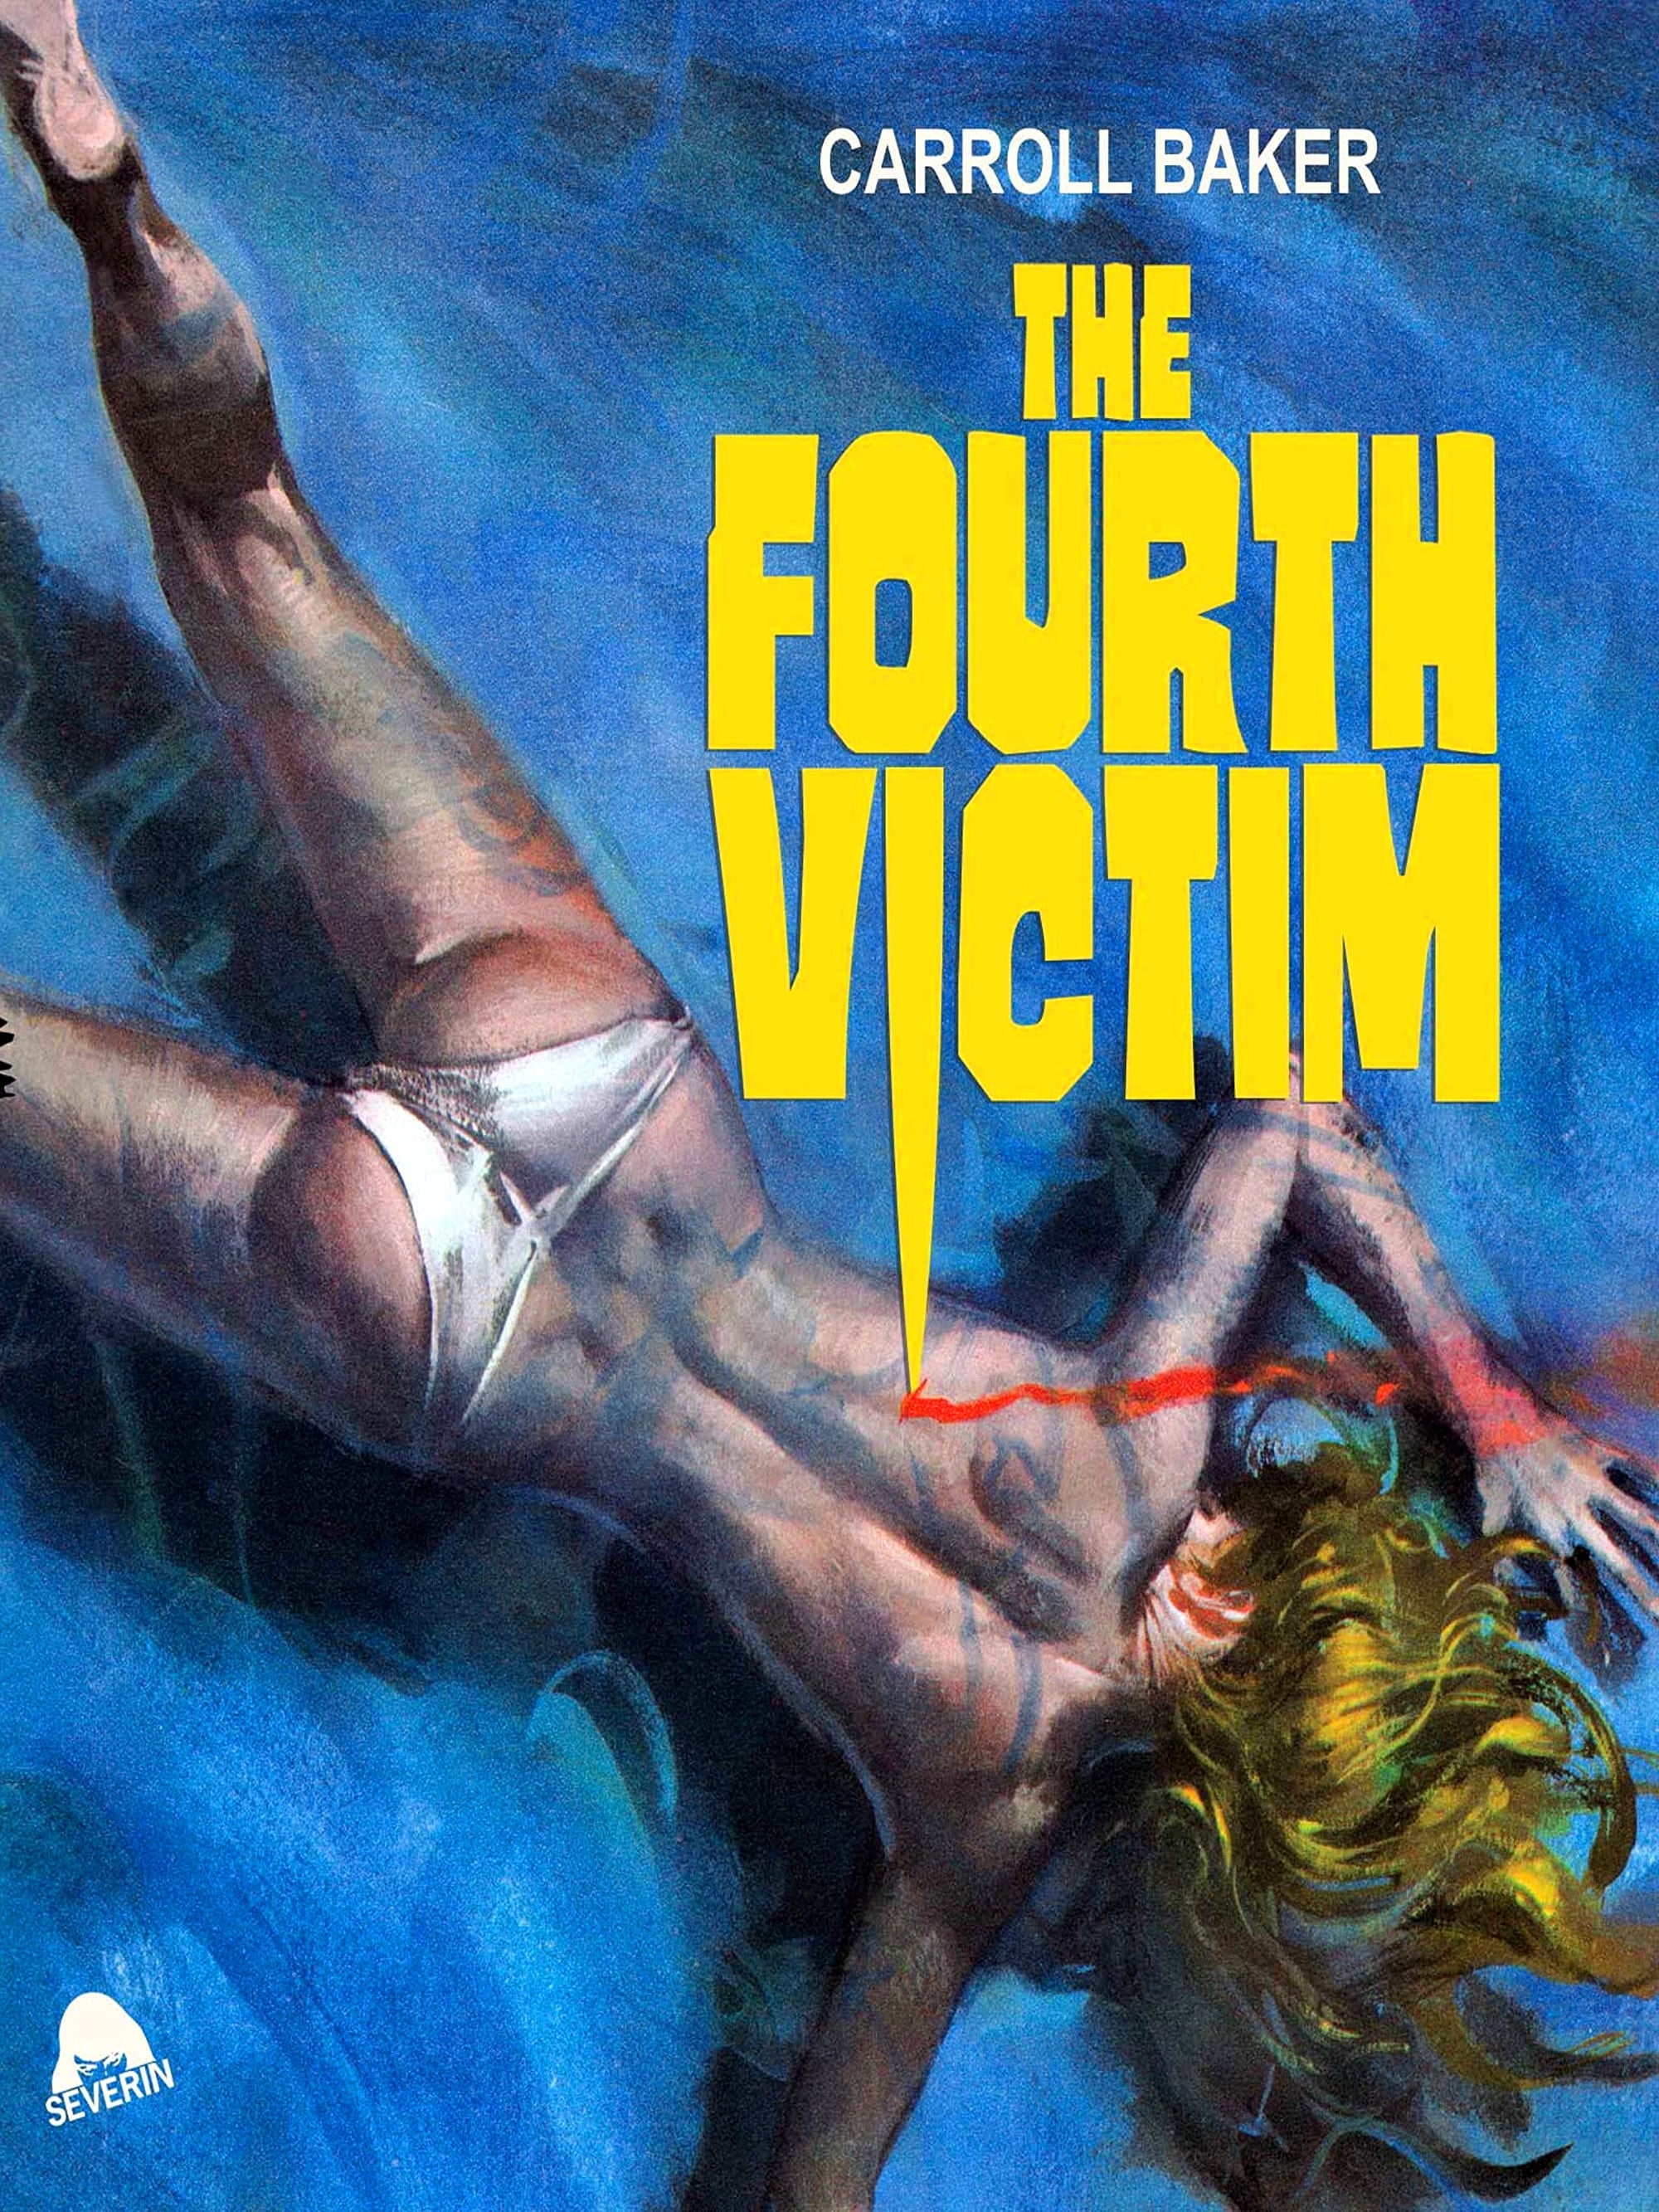 The Fourth Victim